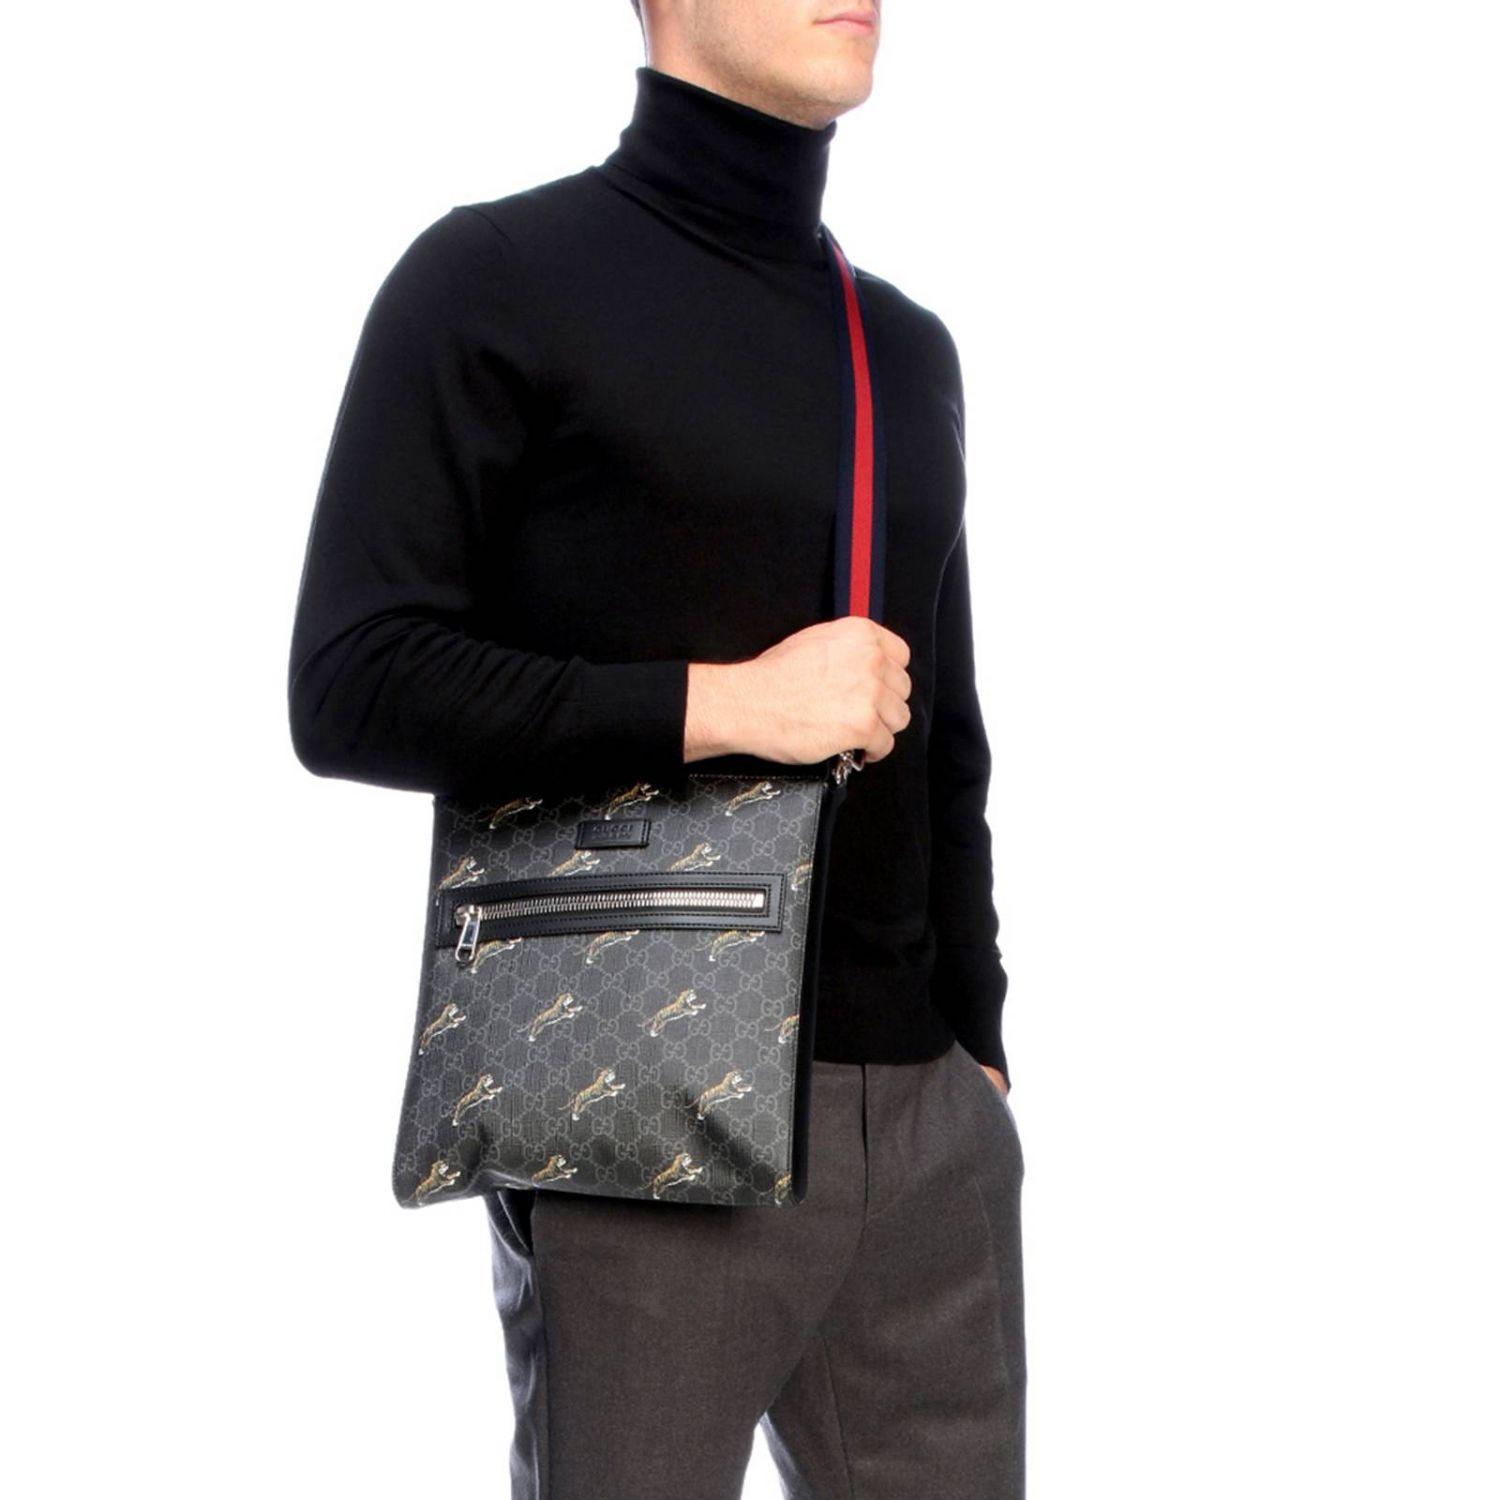 Gucci GG Monogram Print Tote Bag in Black for Men